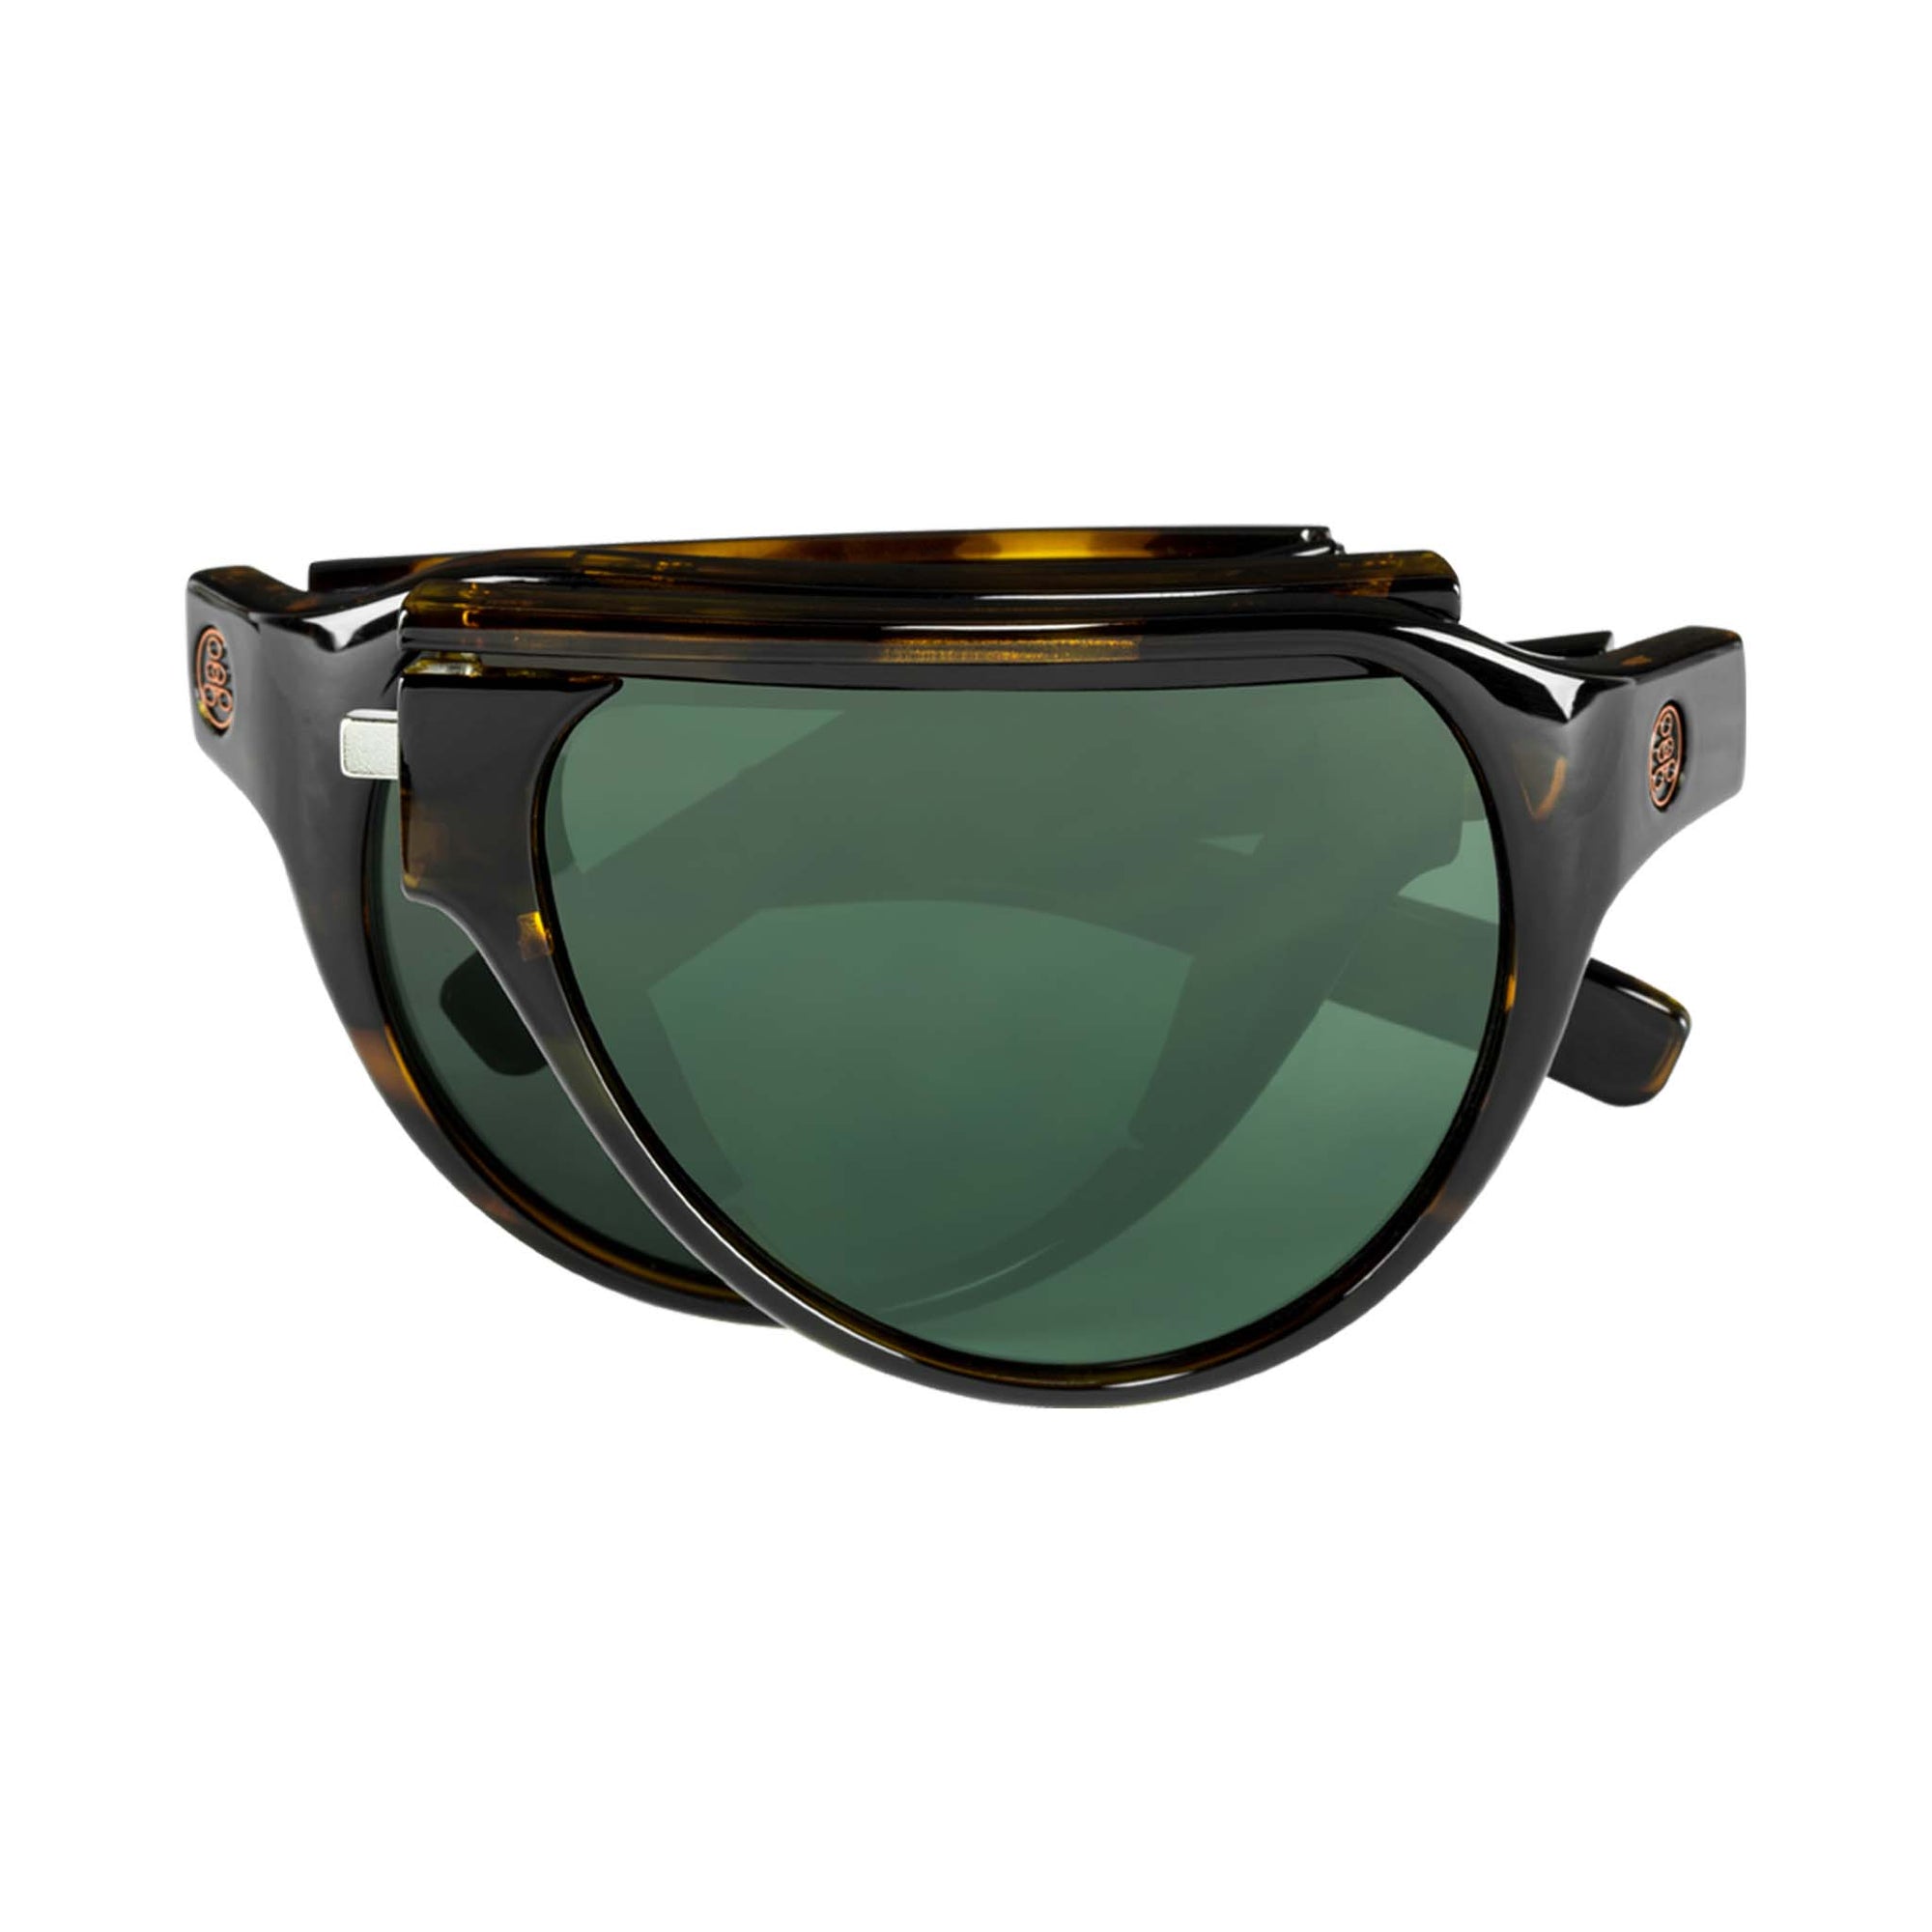 Popticals, Premium Compact Sunglasses, PopAir, 300010-CTEP, Polarized Sunglasses, Gloss Tortoise Frame, Green Lenses, Compact View